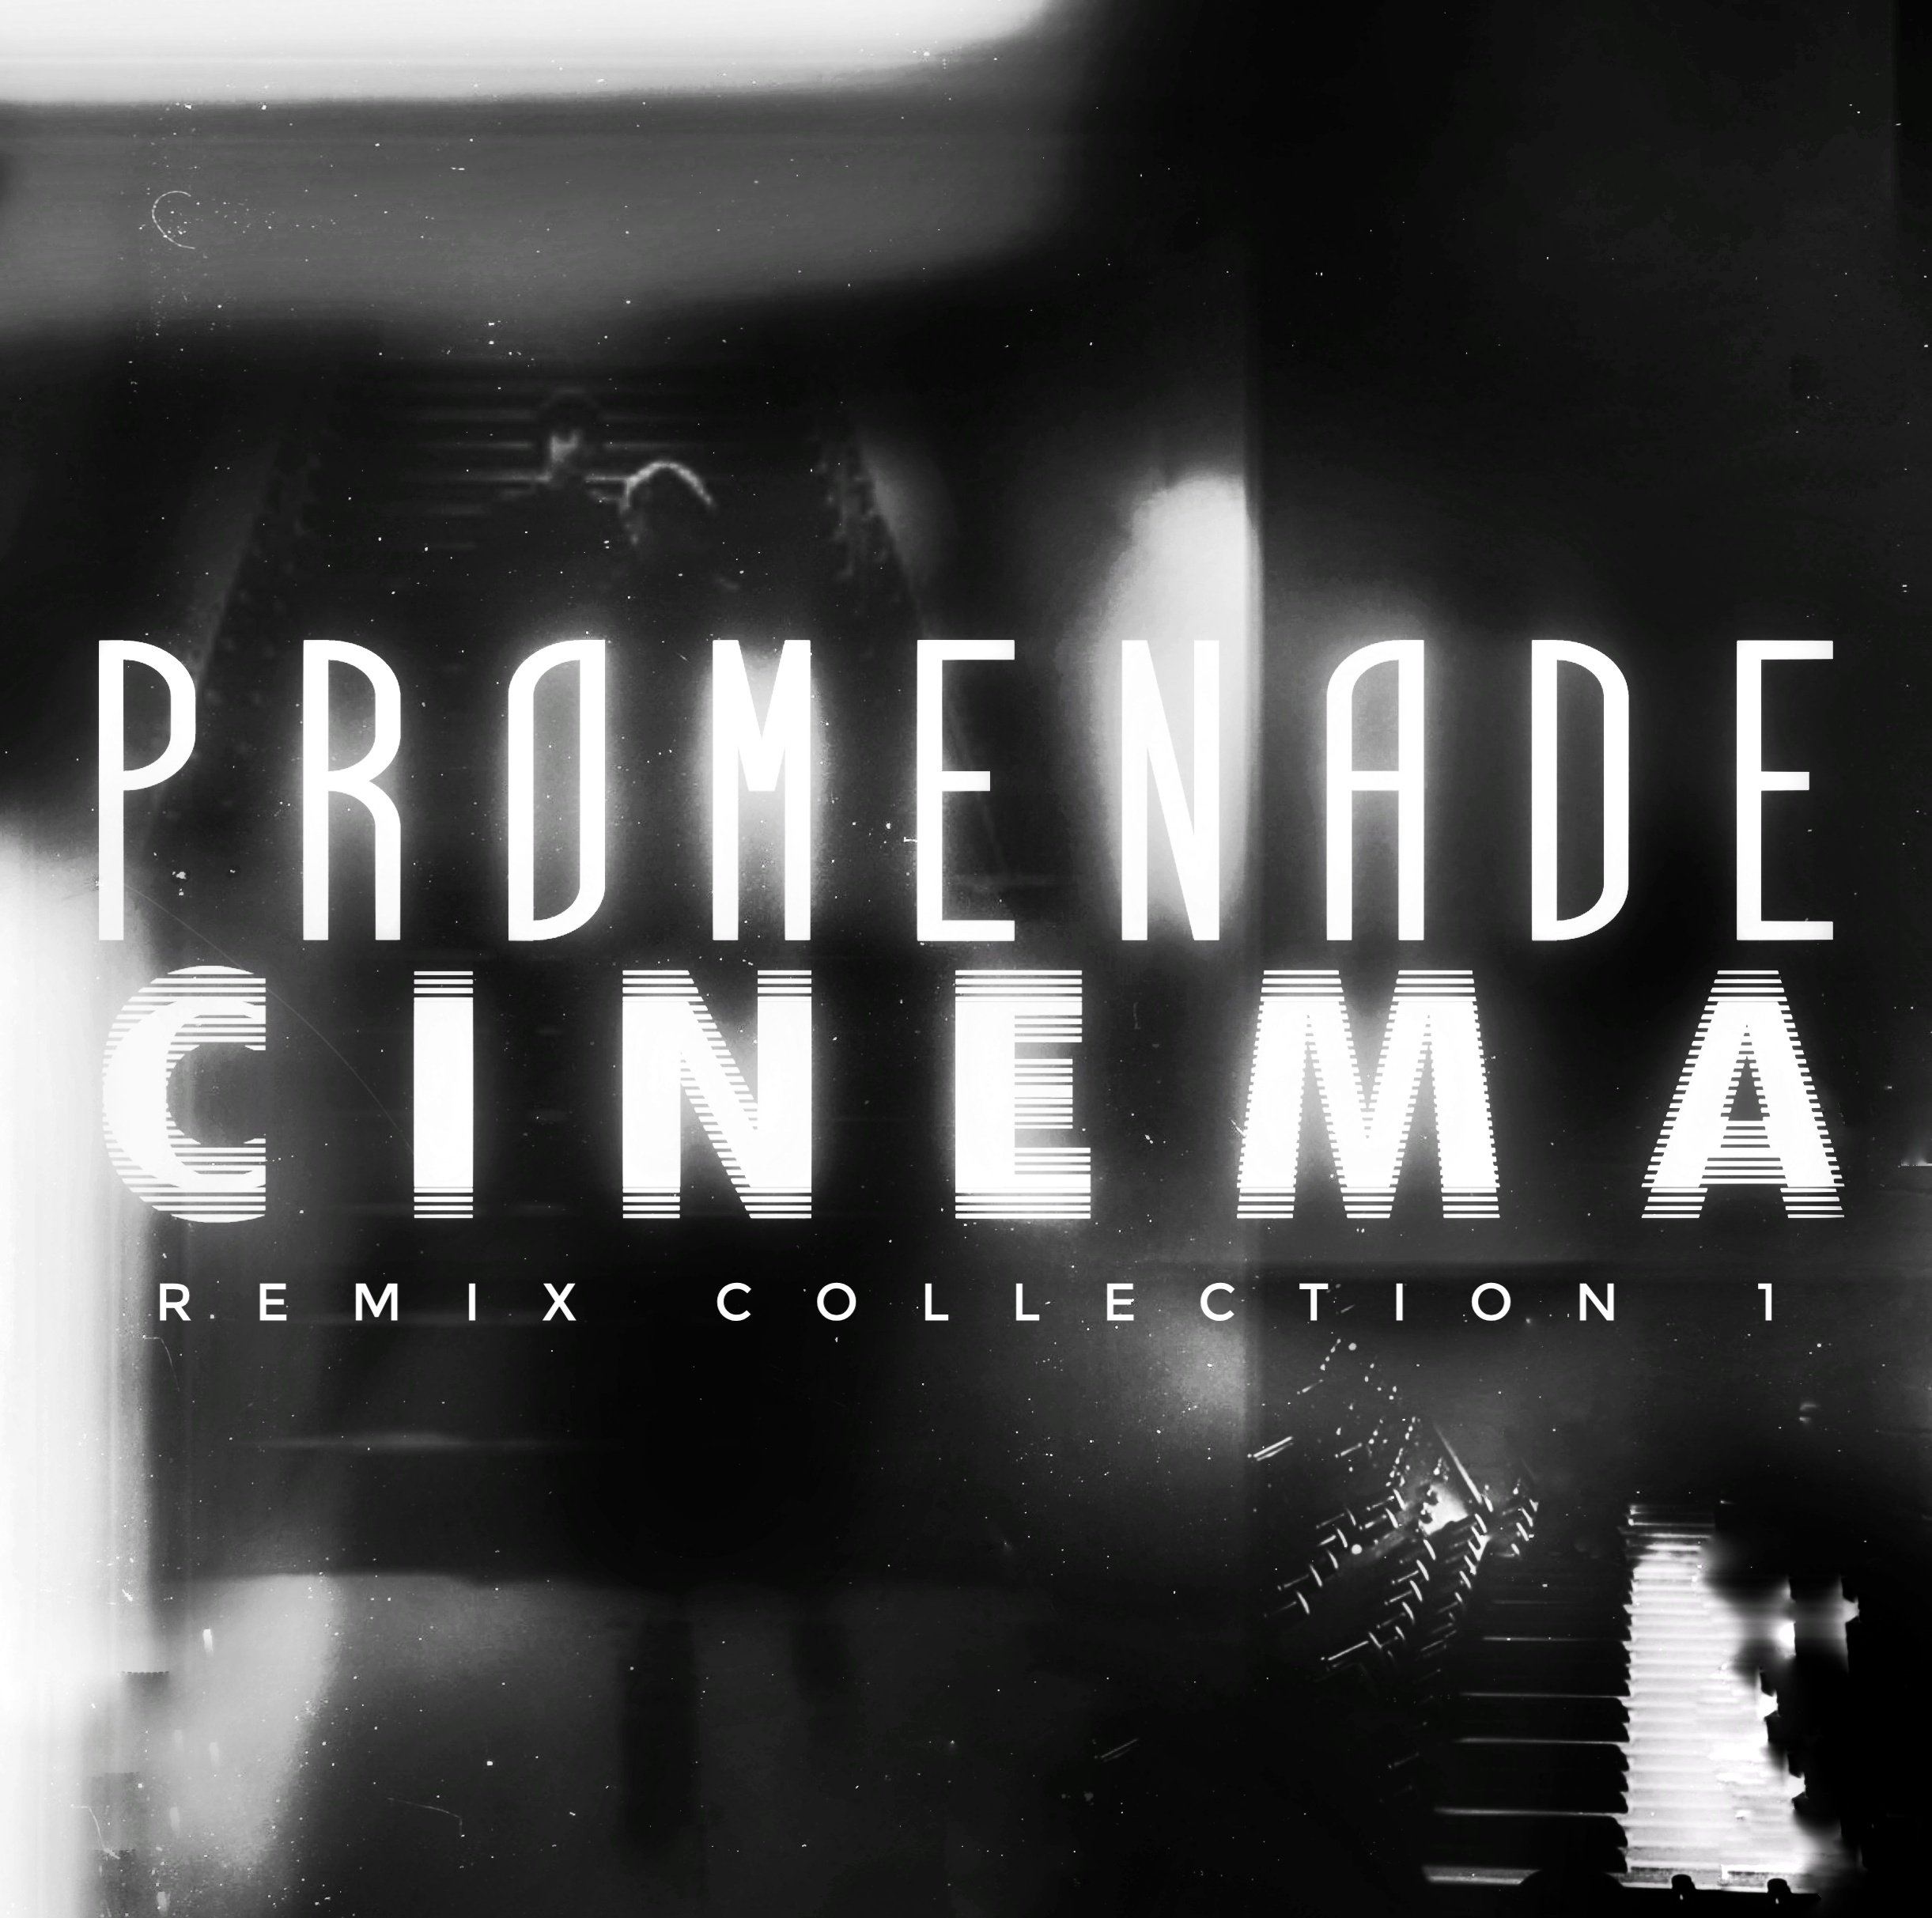 You at the cinema last night. Ремикс Синема. Promenade Cinema. First Cinema Remix. Cyferdyne keep your Silence.